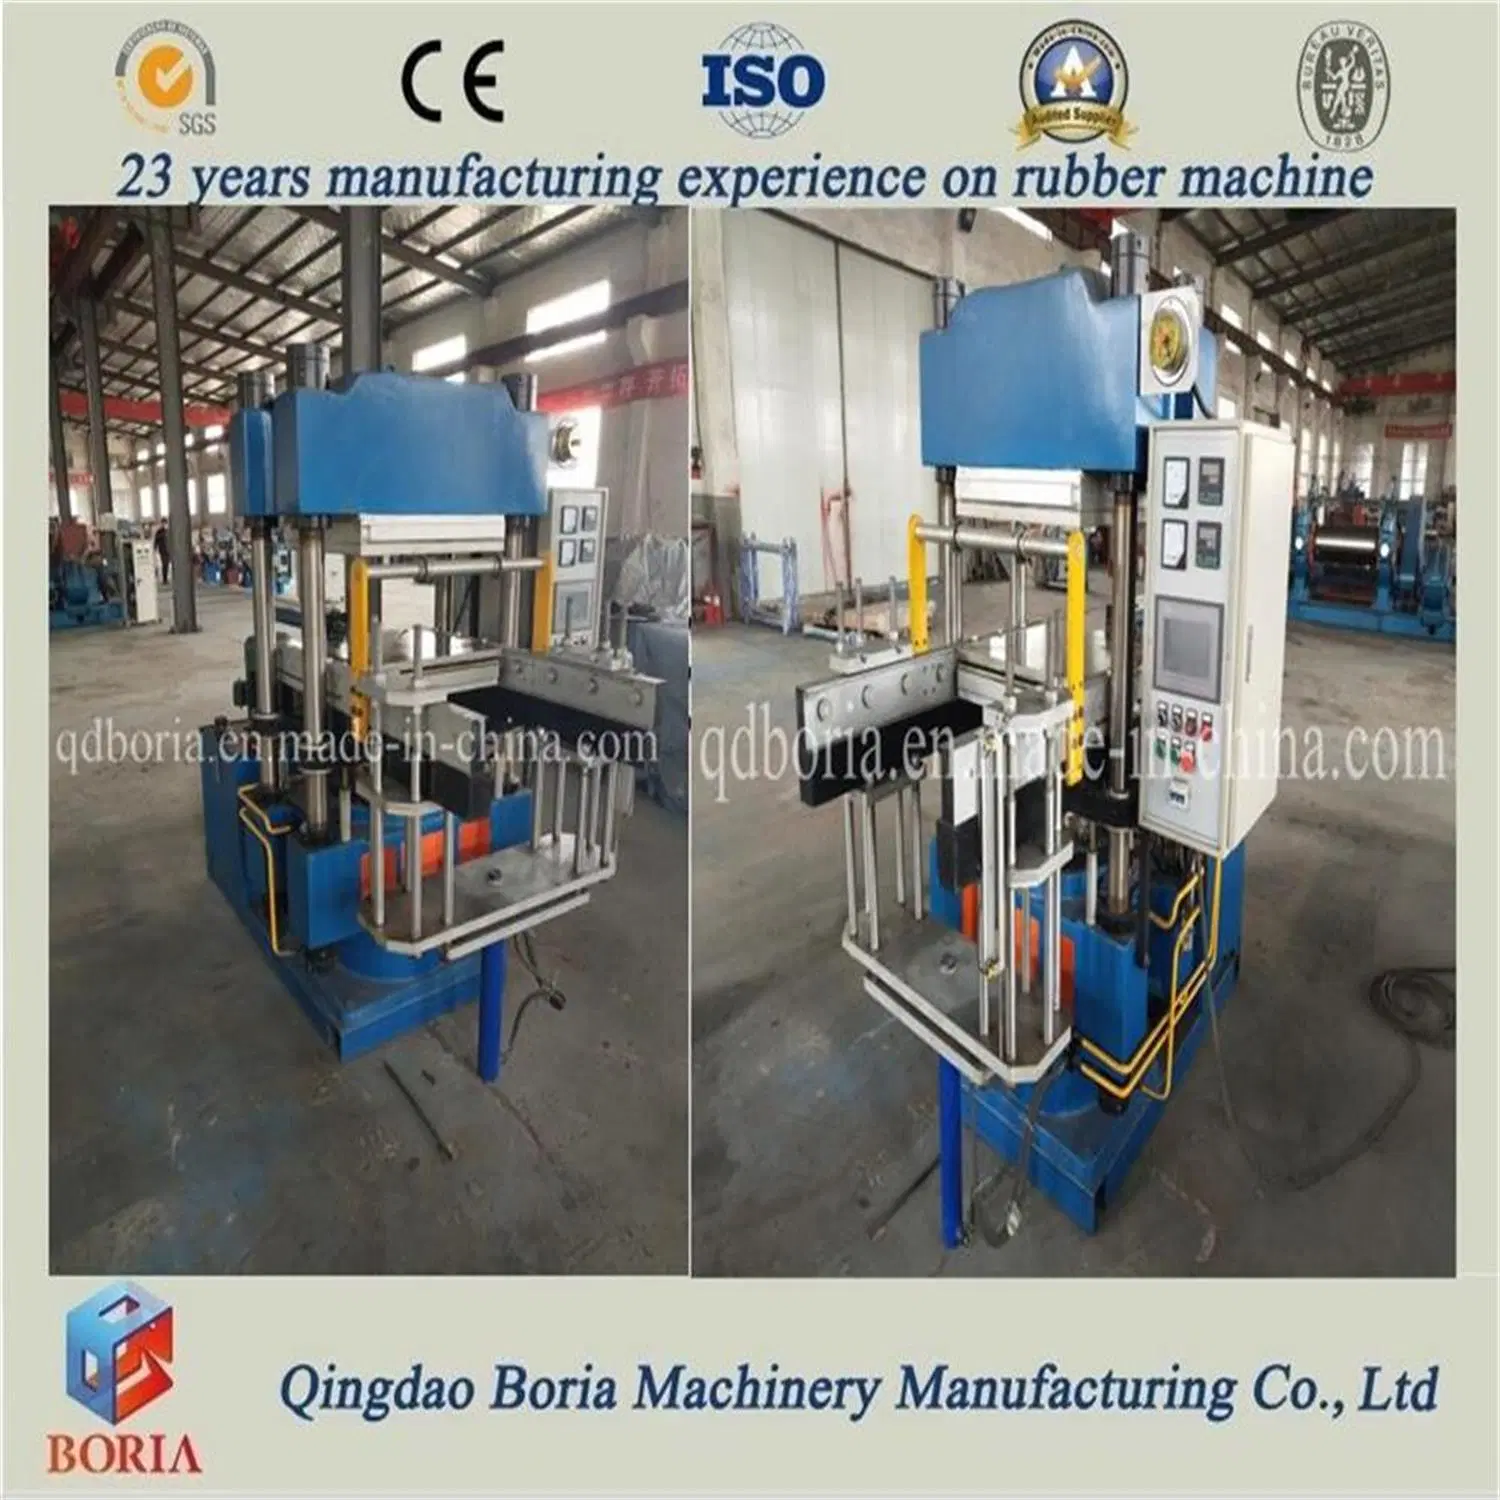 4 Column Type Automatic Duplex Rubber Vulcanizing Press / Hydraulic Vulcanizing Press with ISO 9001